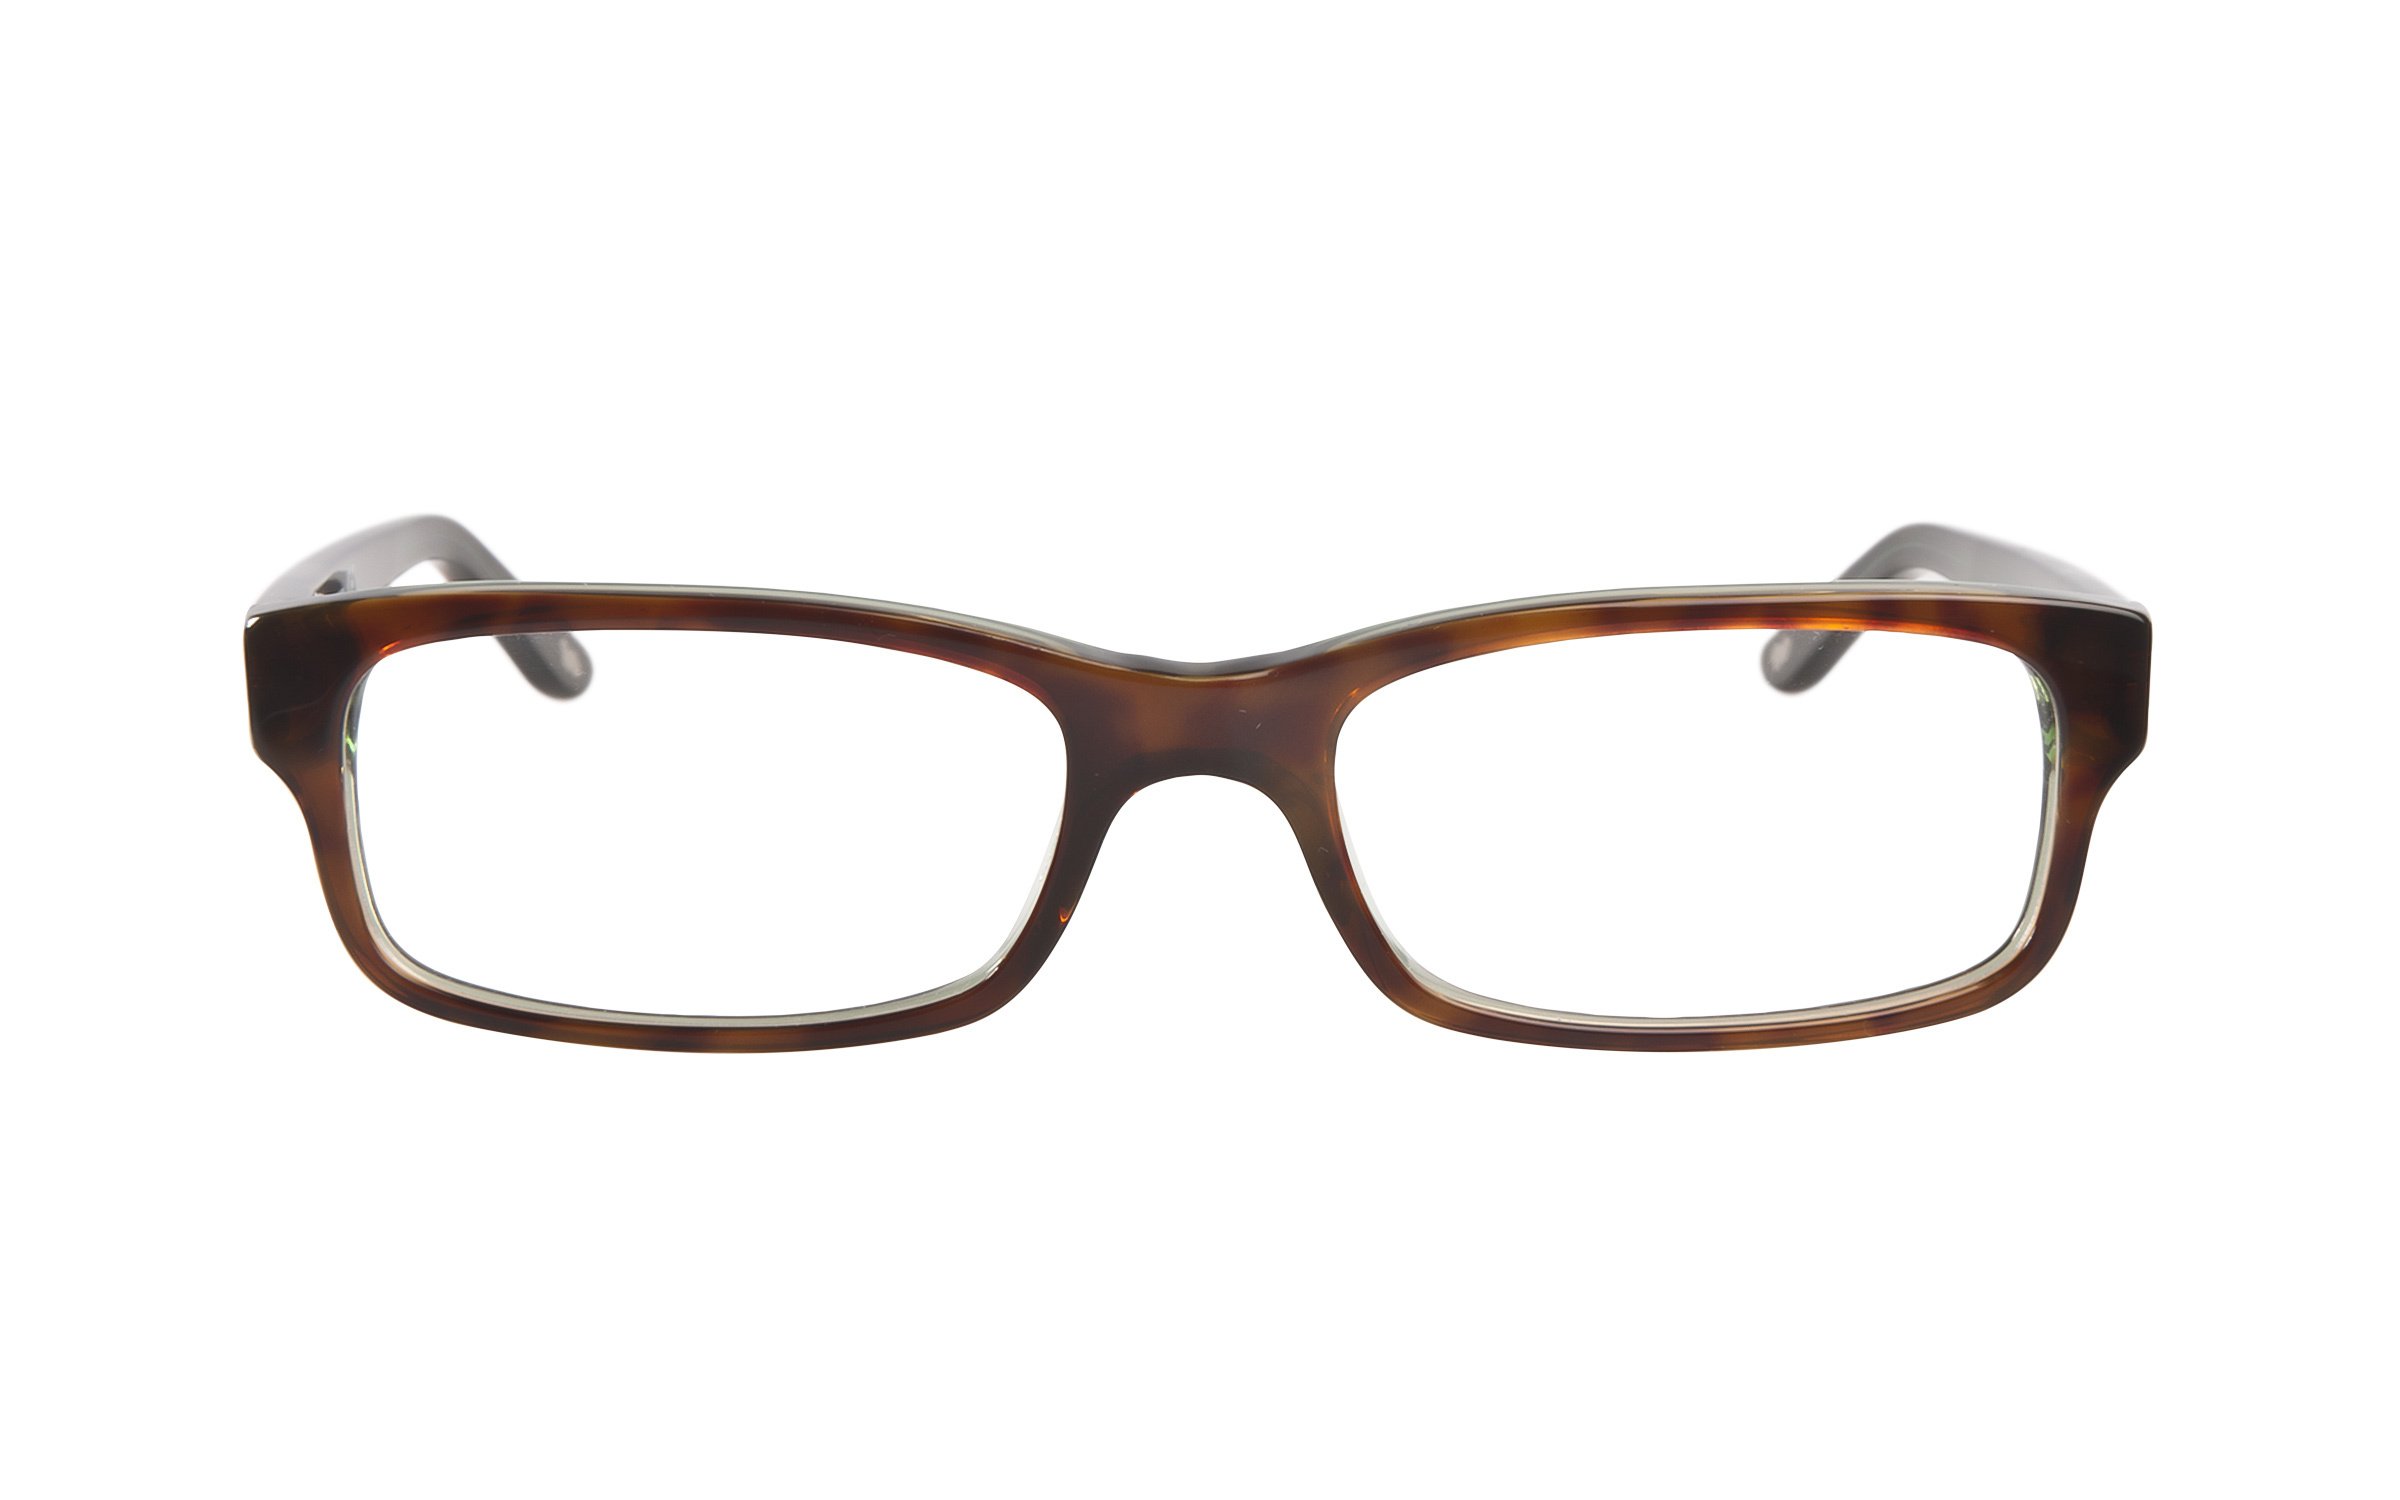 Ray-Ban Glasses Brown Acetate Online Coastal